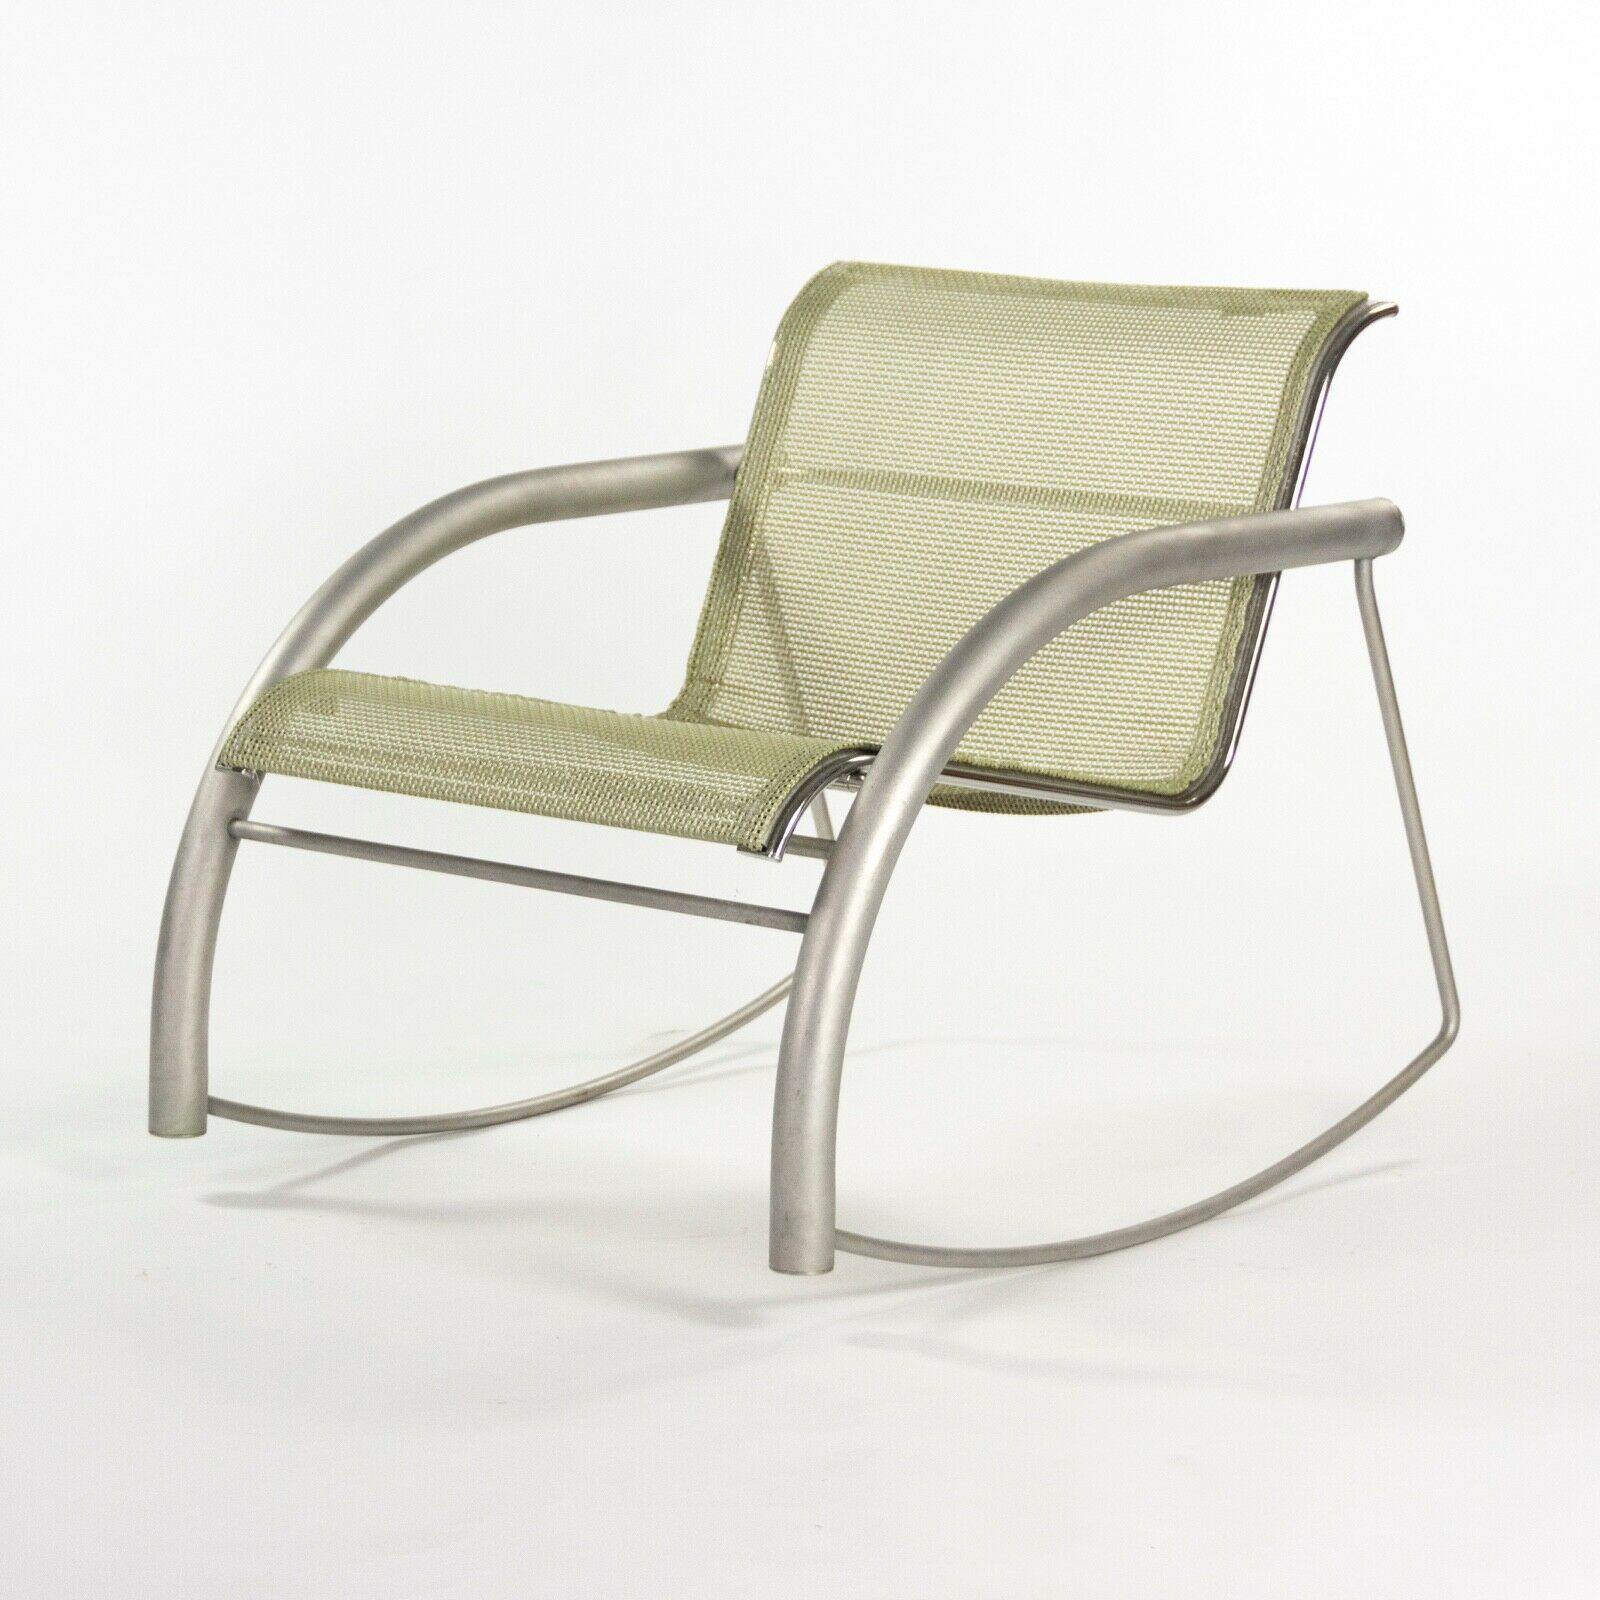 Prototype Rocking Chair